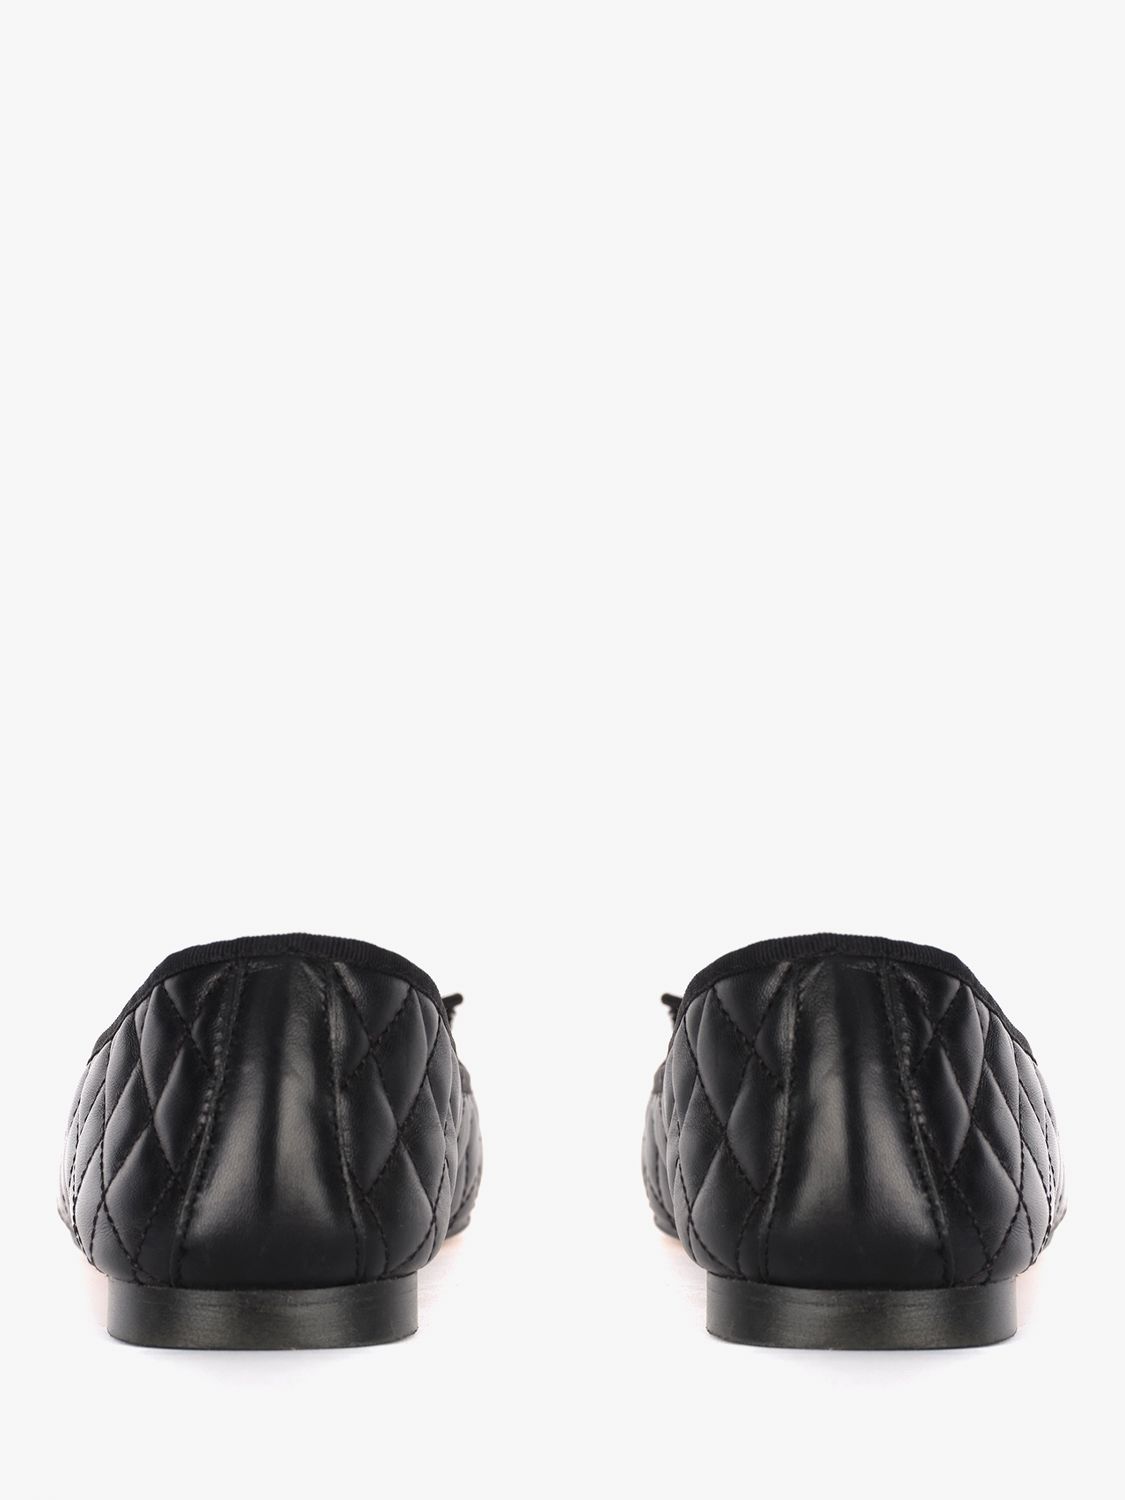 Mint Velvet Gigi Leather Pumps, Black at John Lewis & Partners